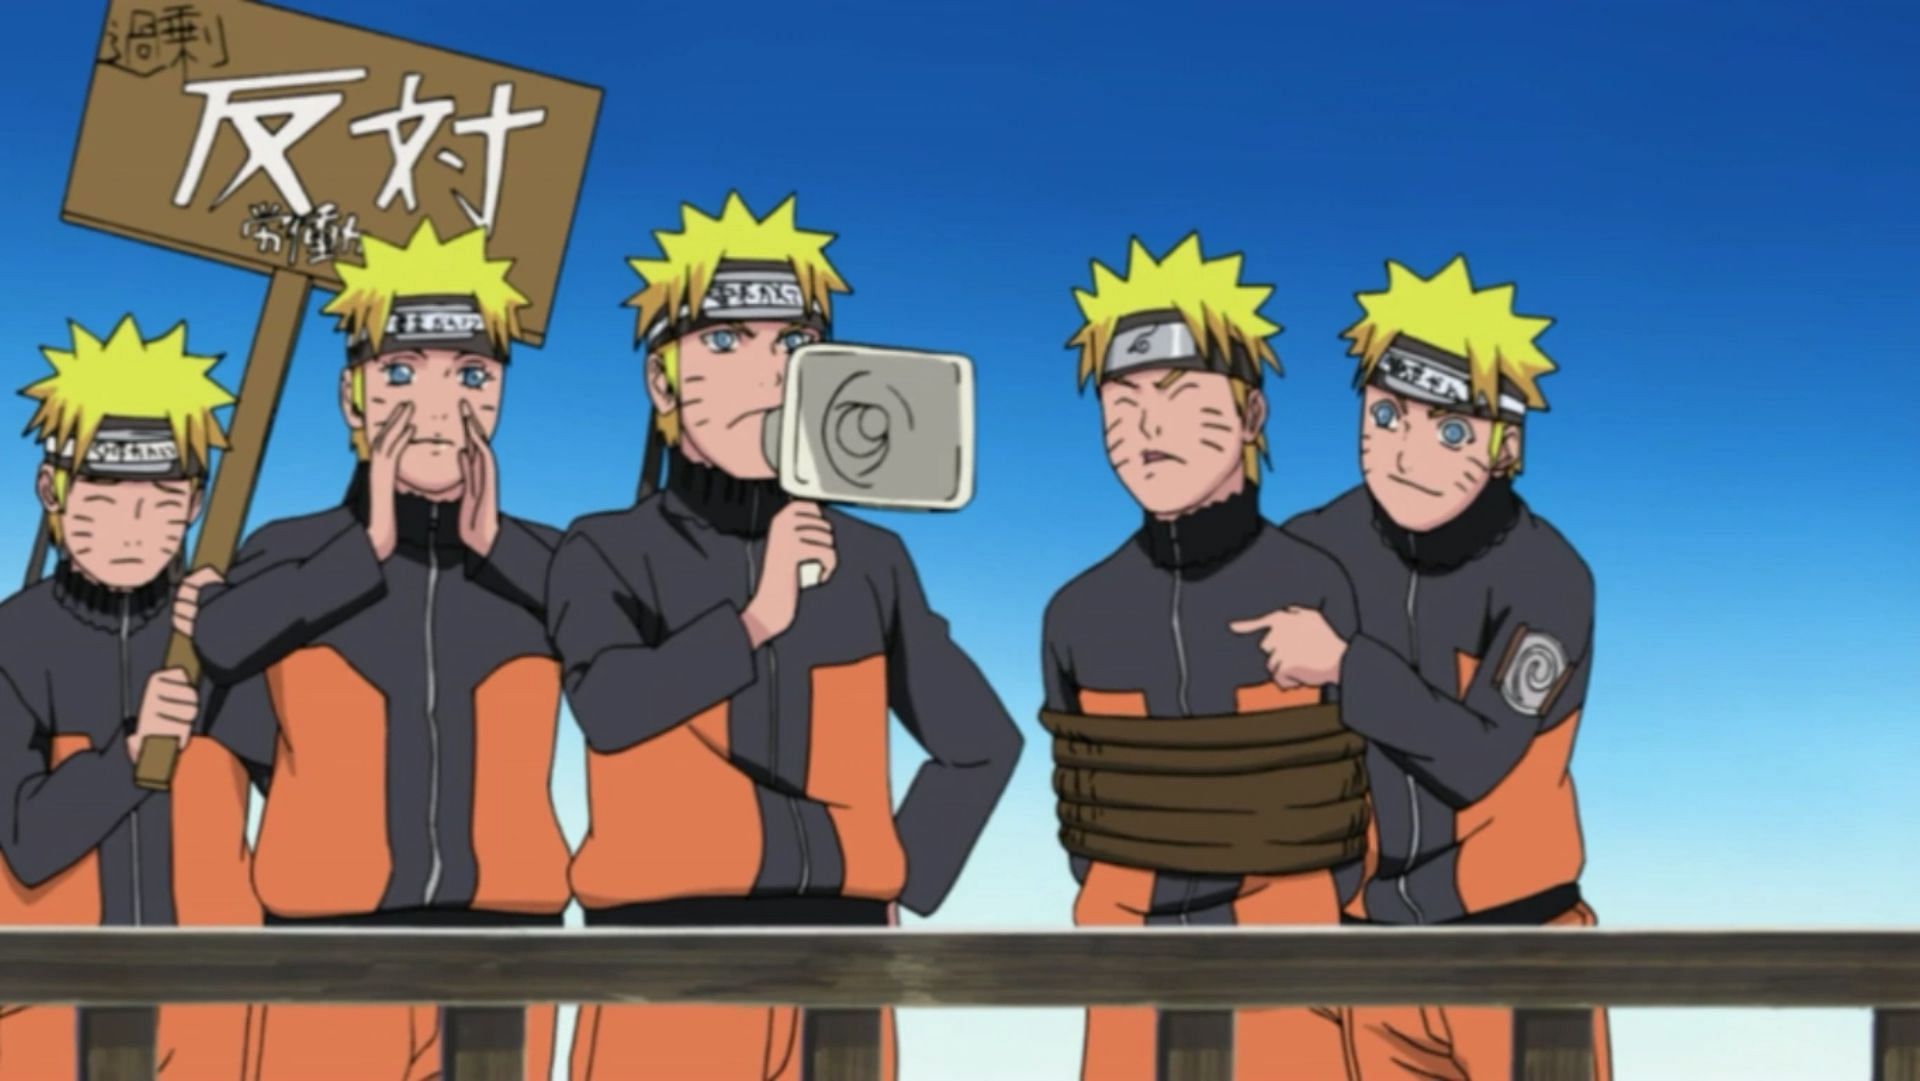 Naruto with his Shadow Clones as seen in the anime Naruto (Image via Studio Pierrot/Viz Media)